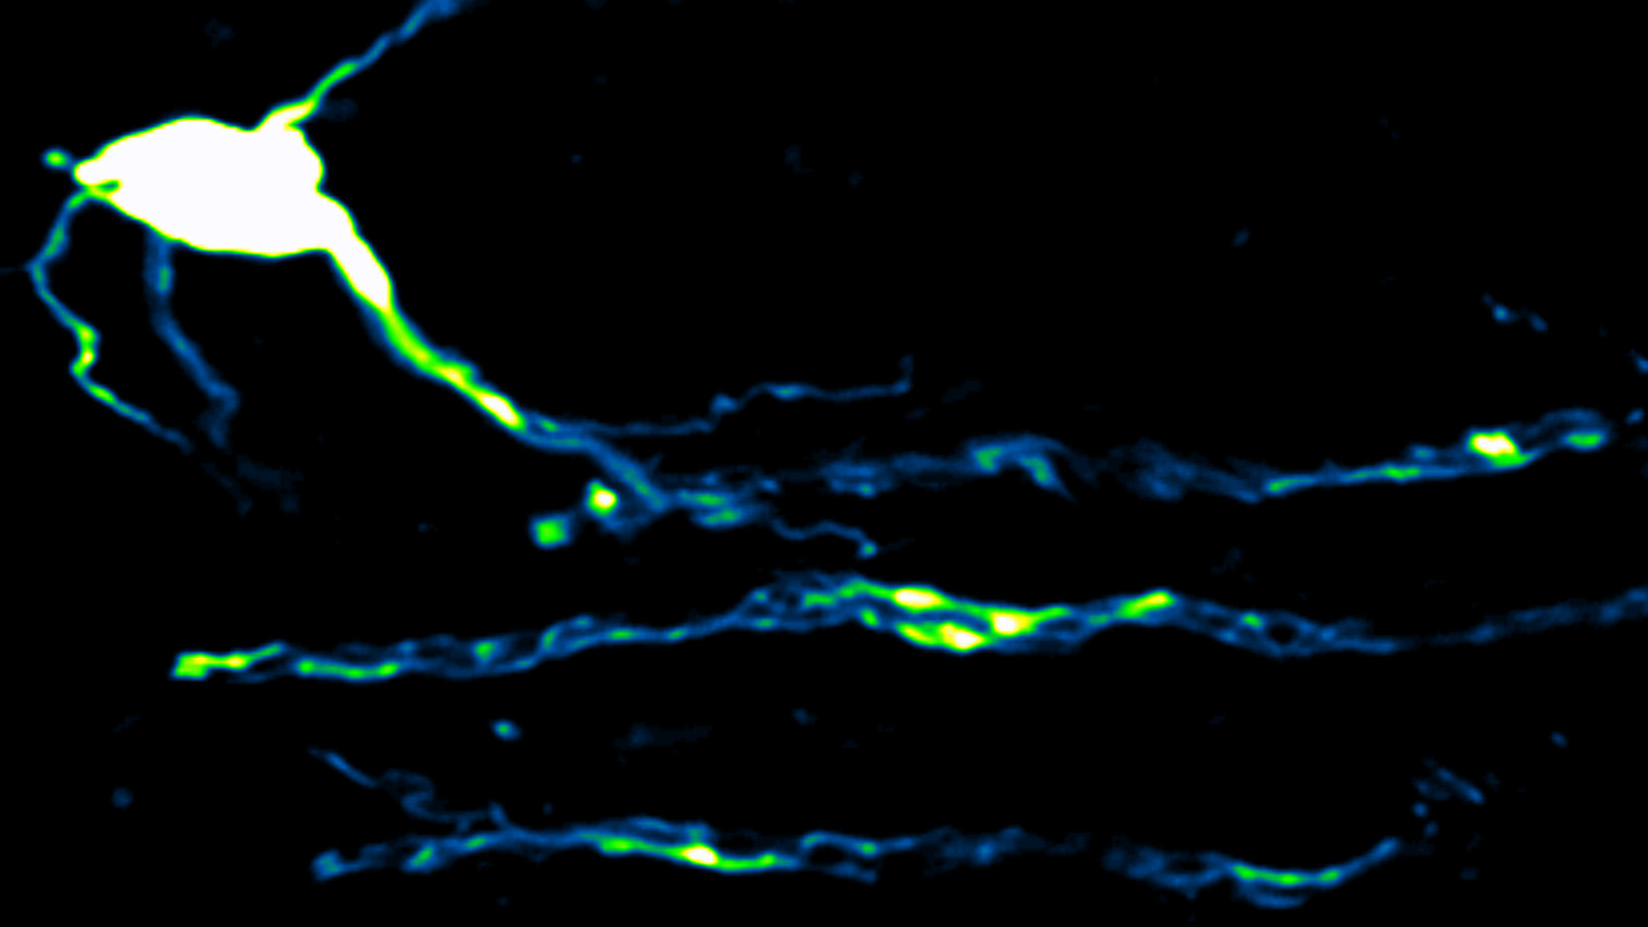 Fluorescence microscopic image of a single oligodendrocyte